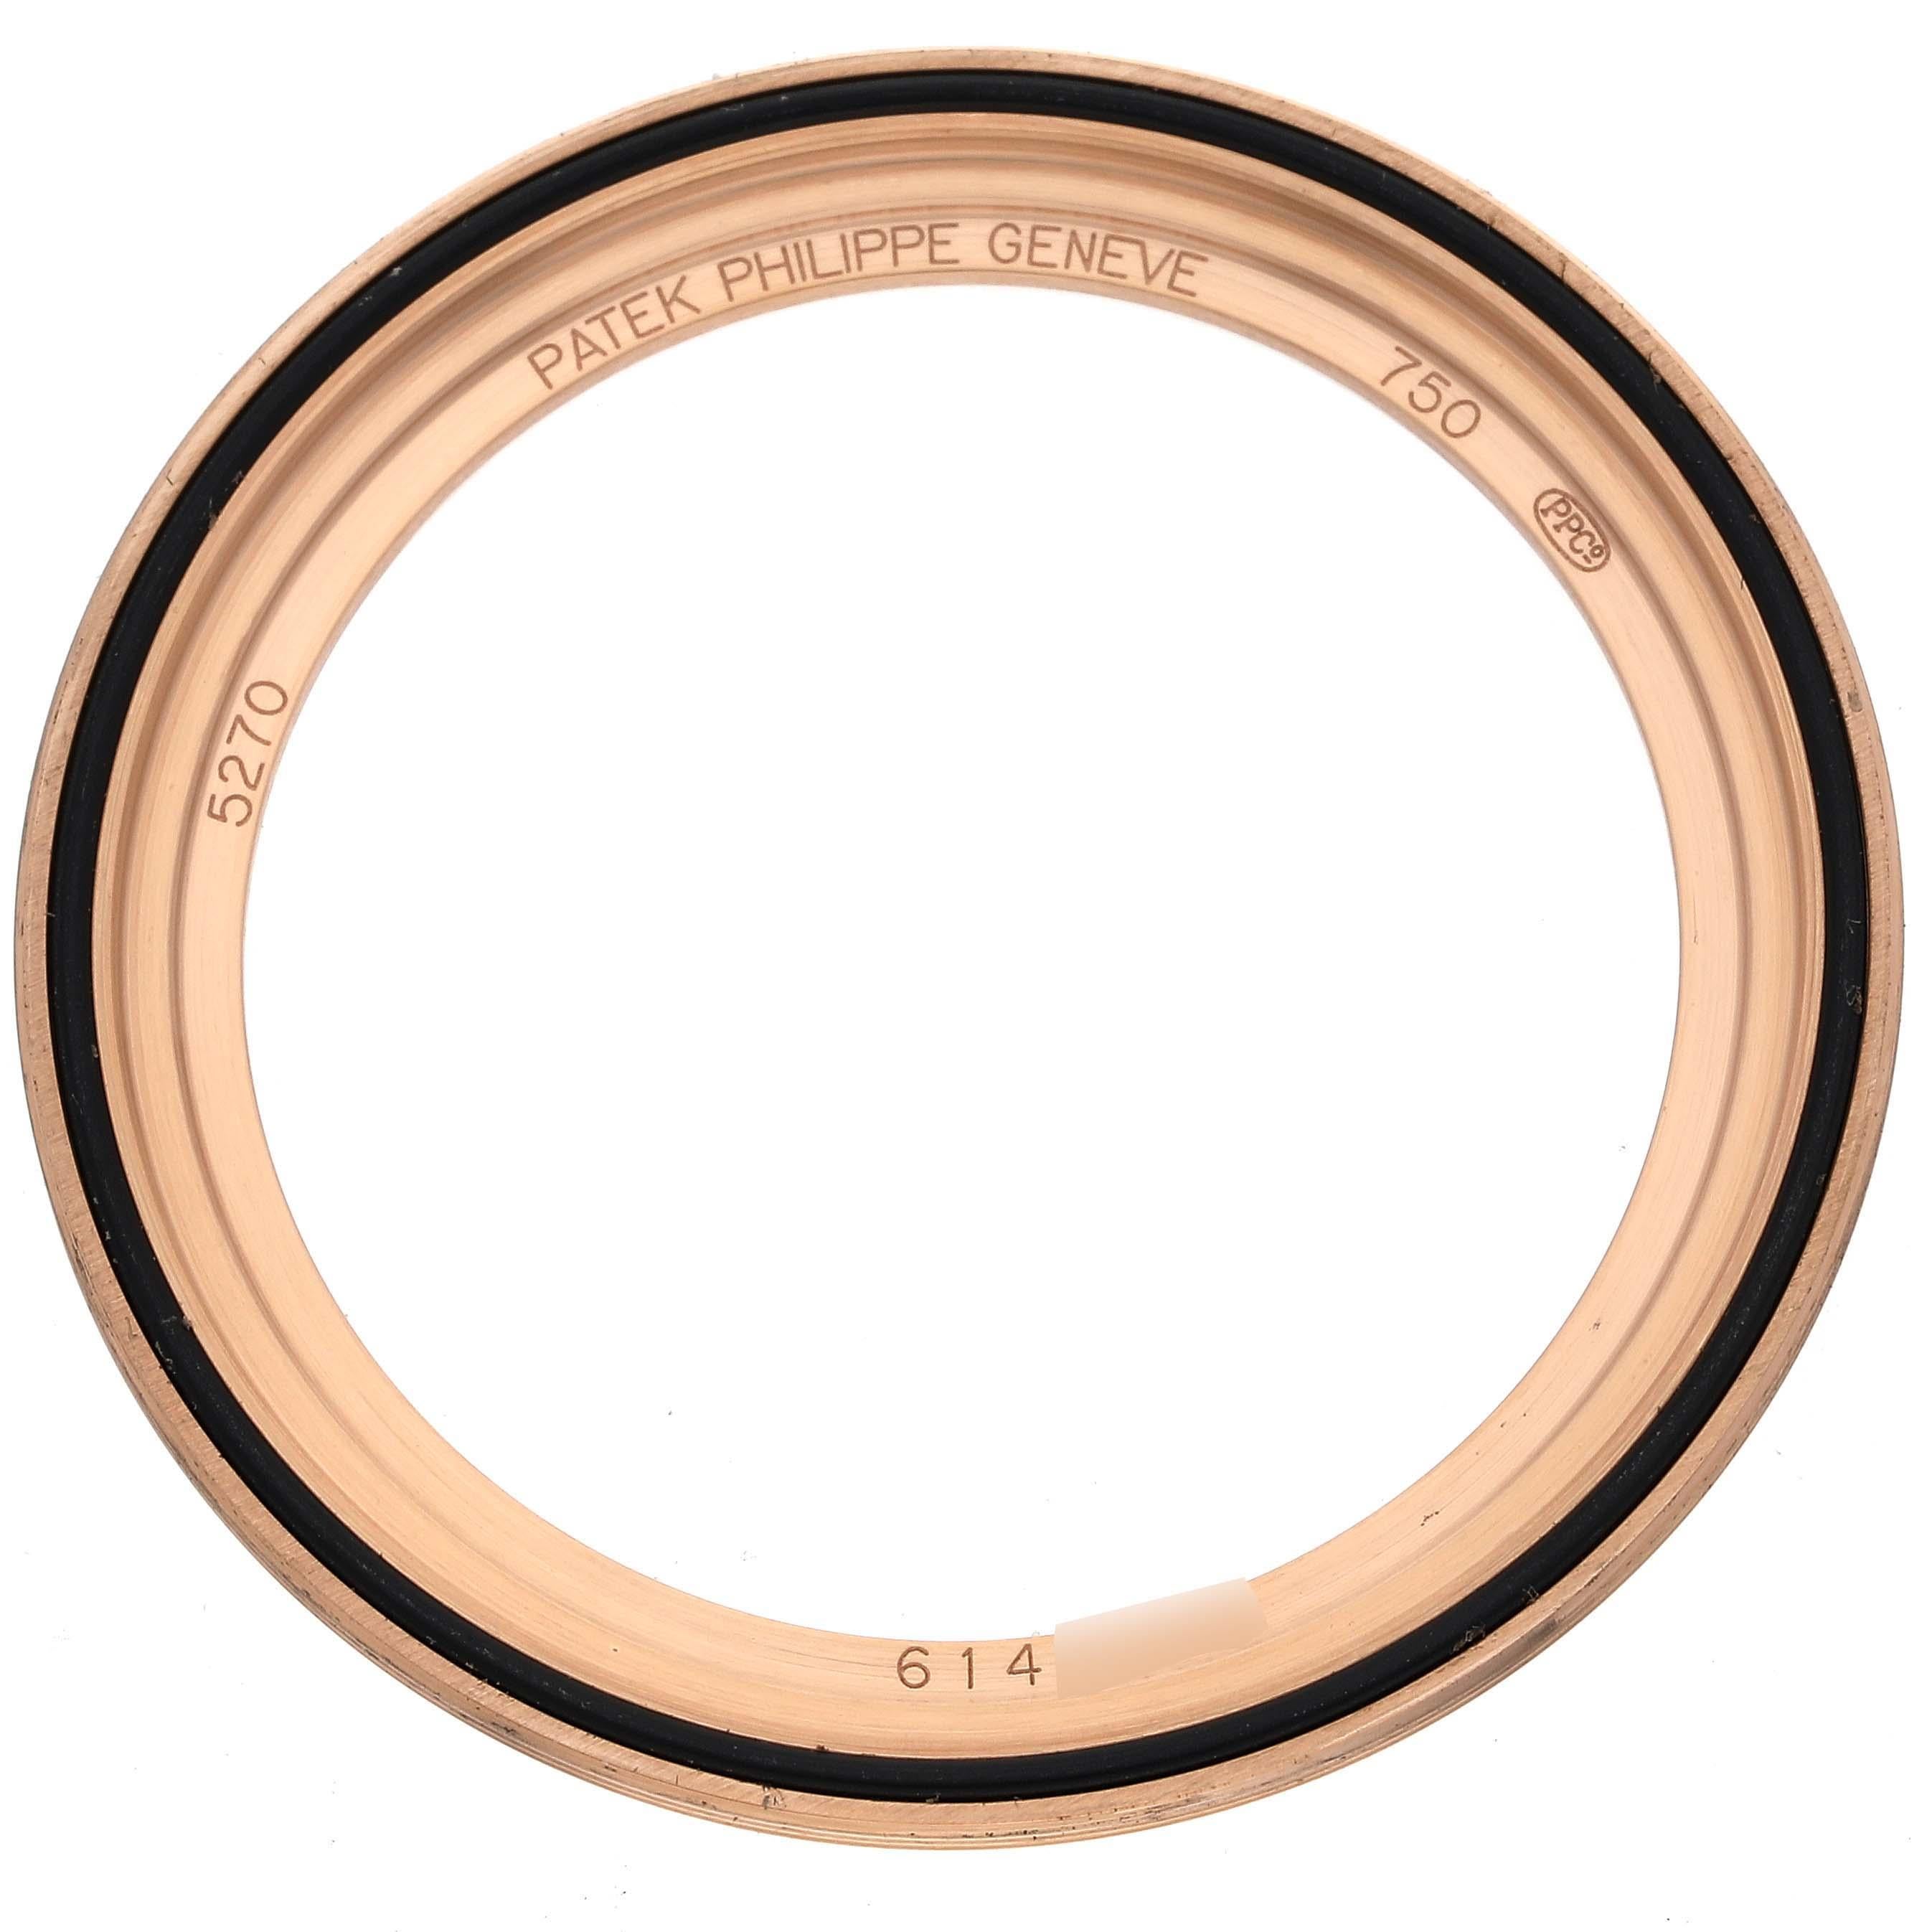 Patek Philippe Grand Complications Perpetual Calendar Rose Gold Watch 5270 For Sale 2